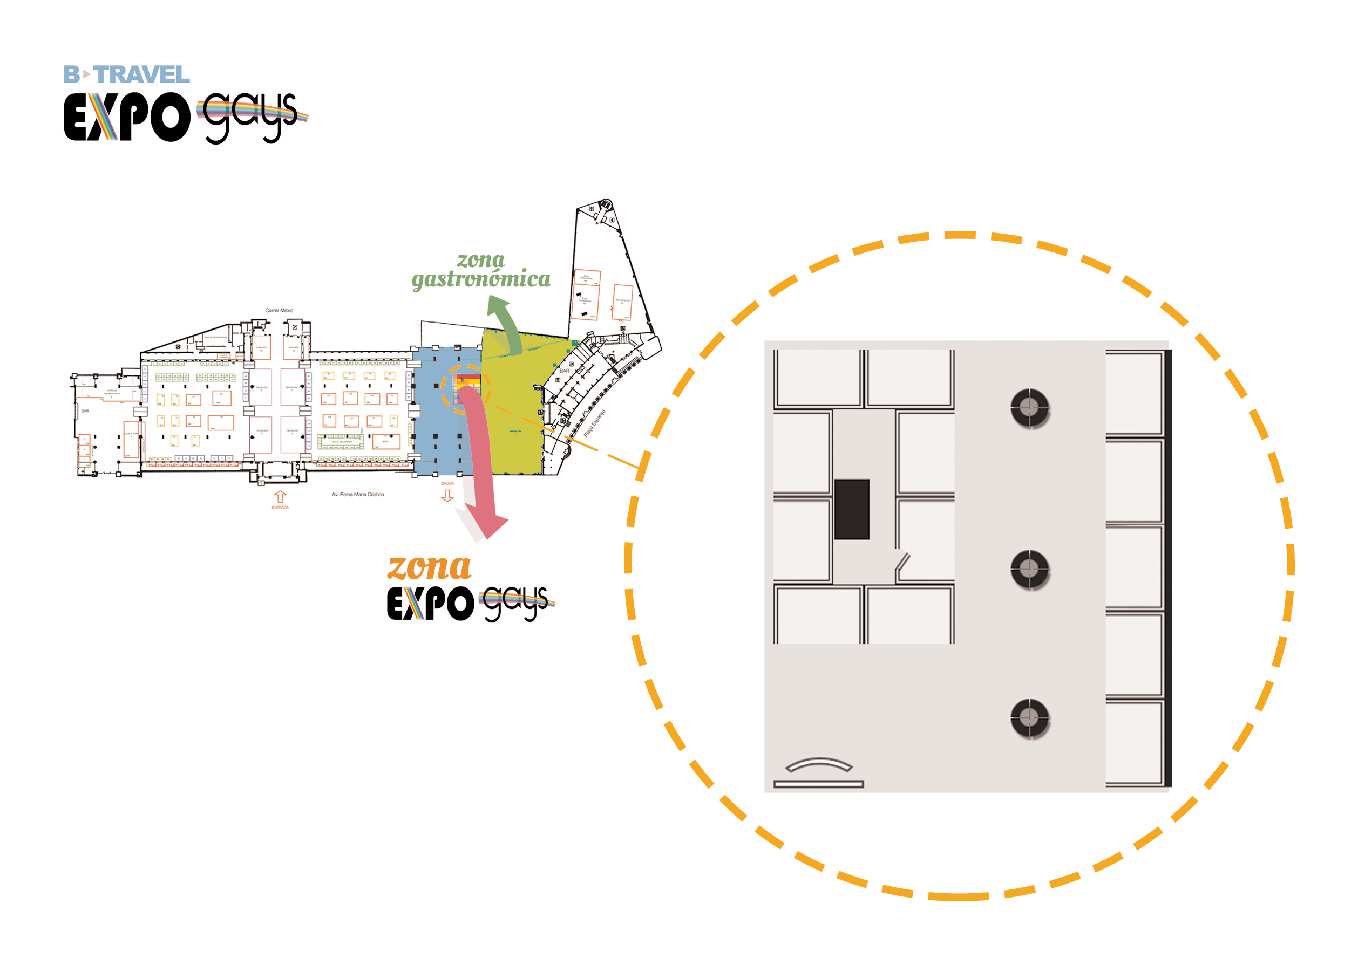 Los Stands en B-Travel Expogays Pack Modular: 1.350 n 6 m2.